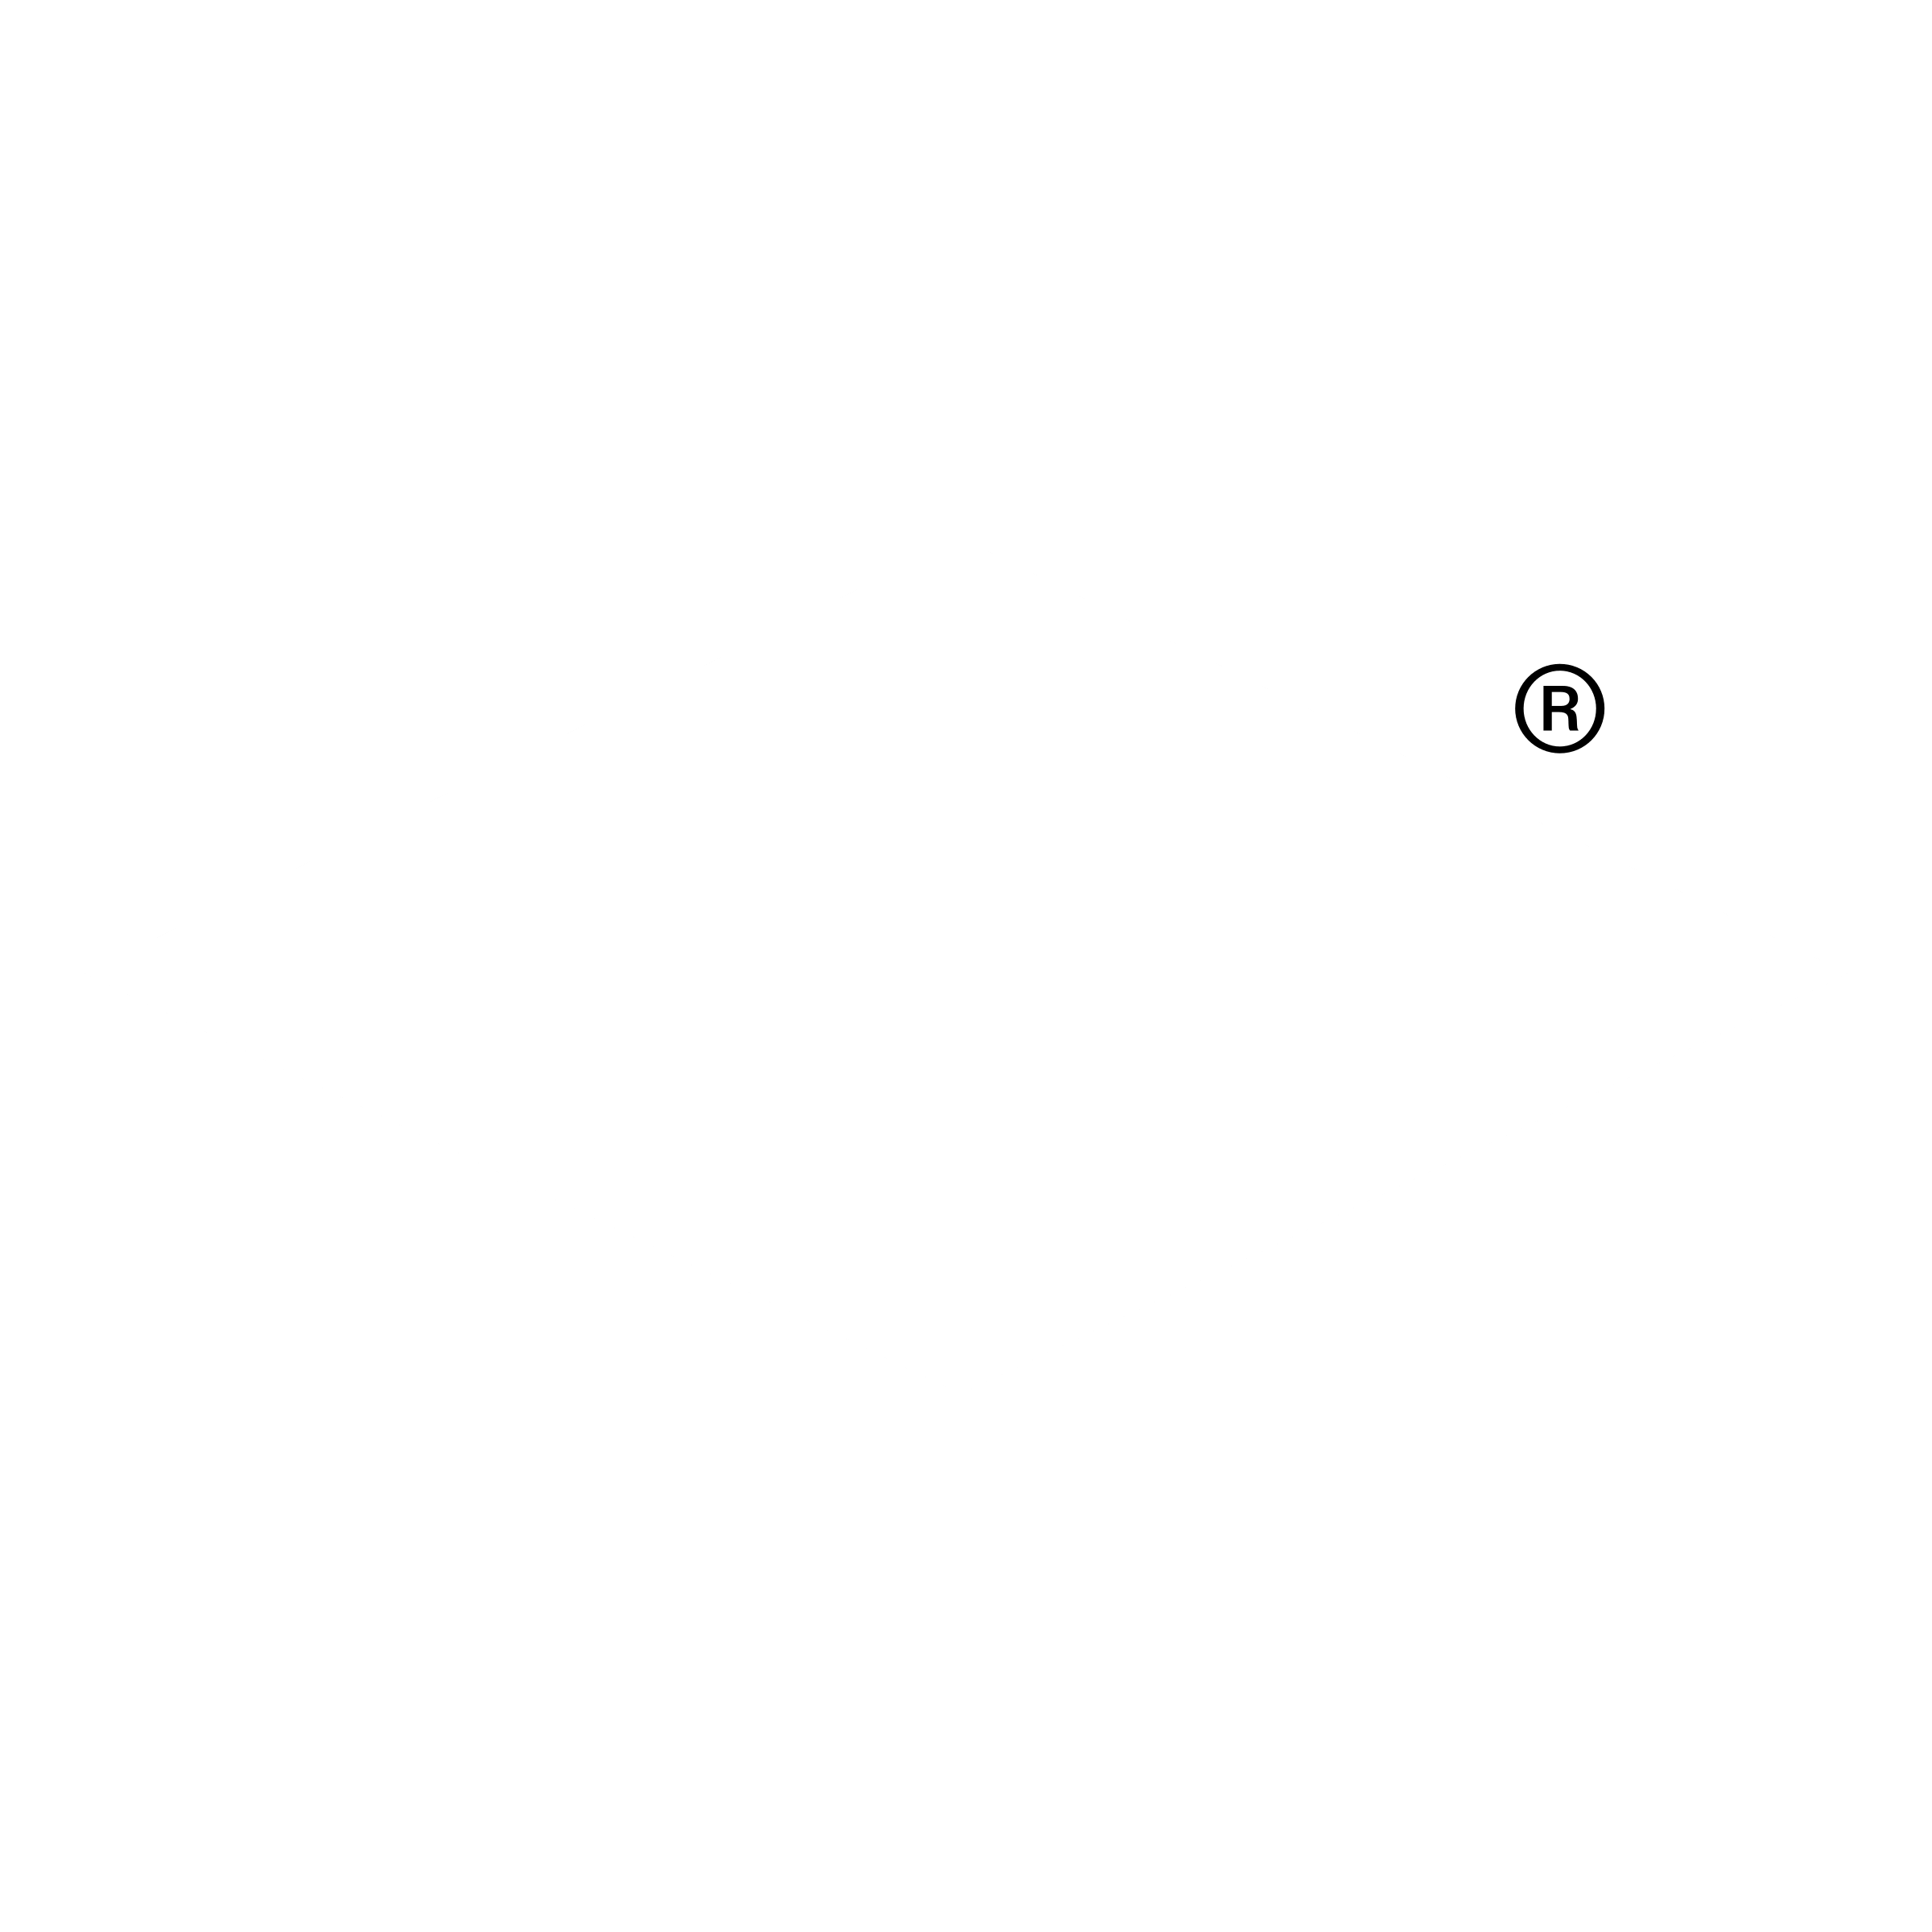 Knipex Logo - Knipex Logo PNG Transparent & SVG Vector - Freebie Supply